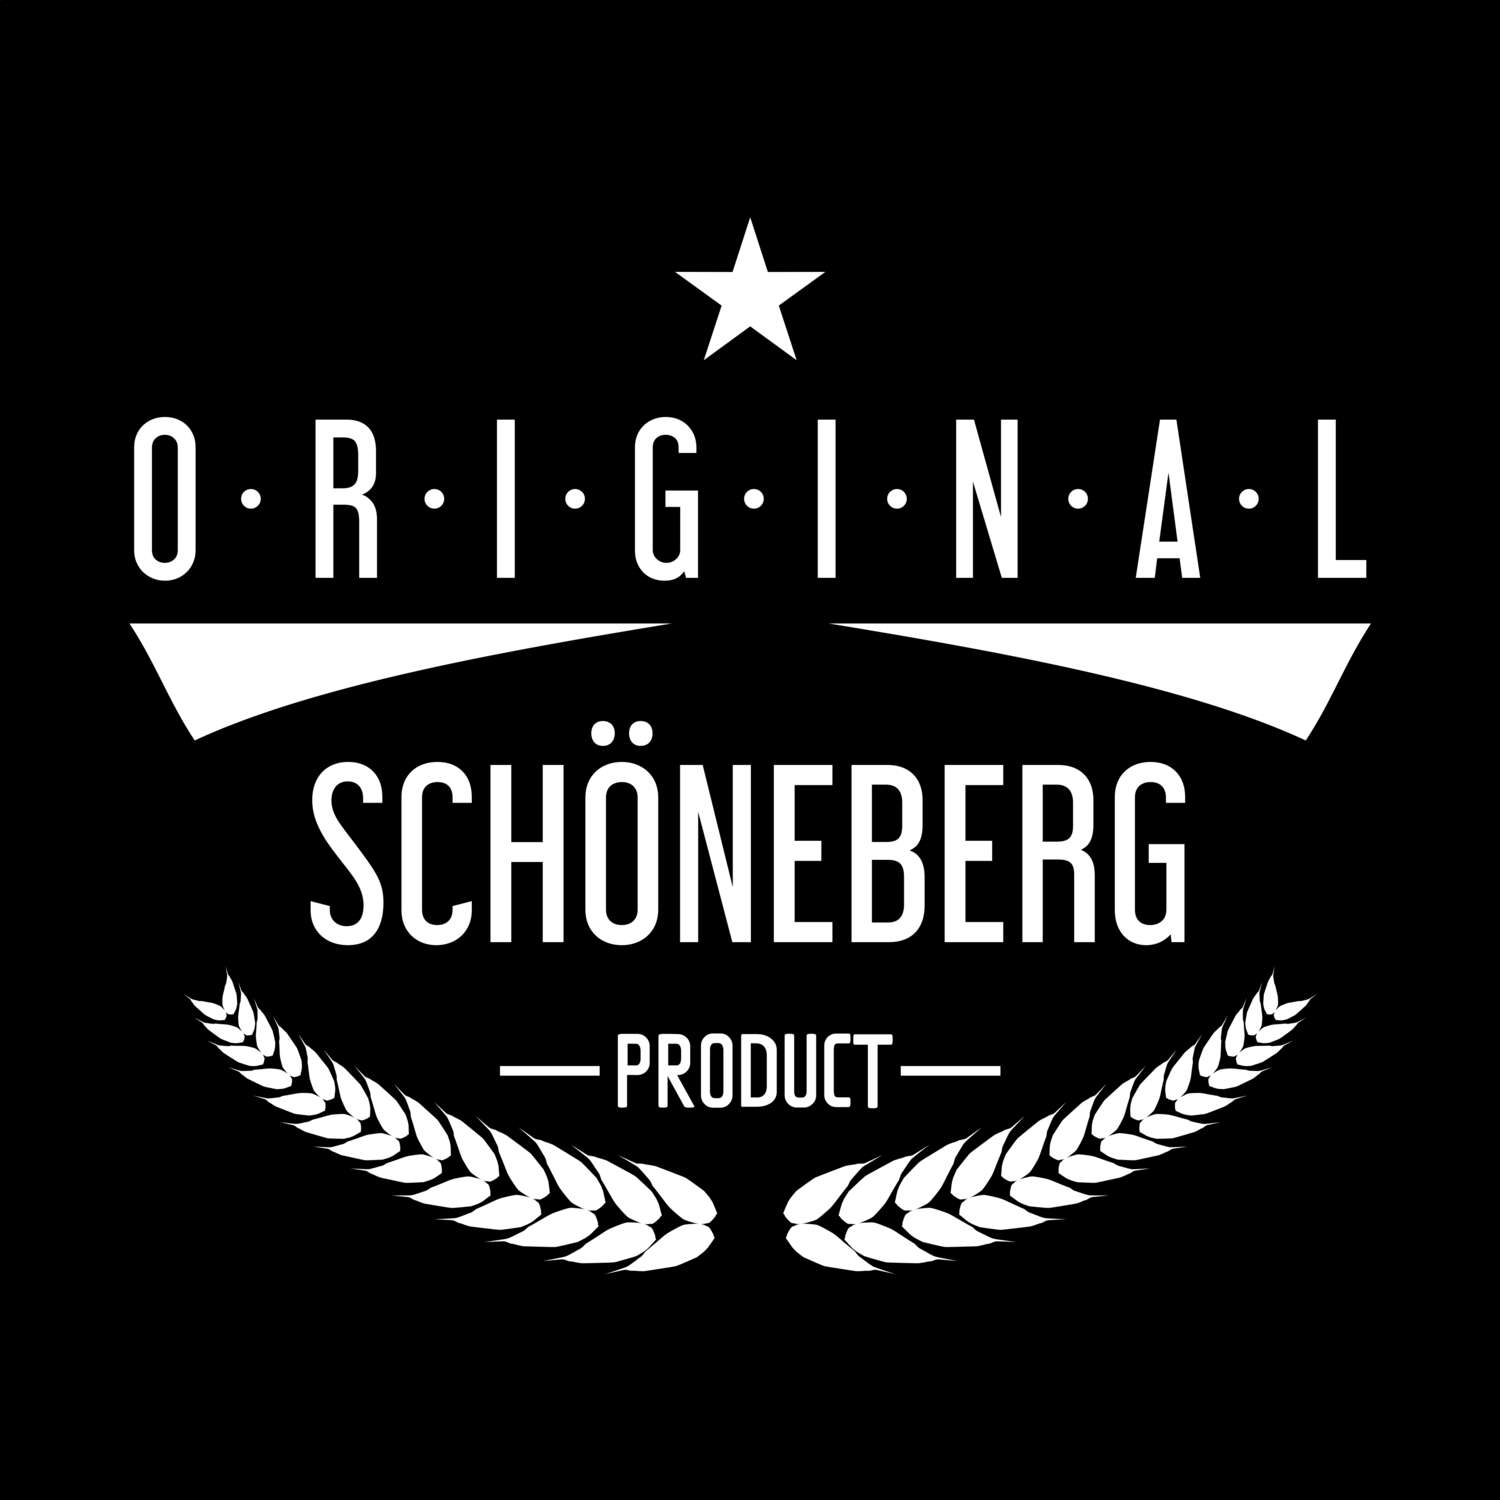 Schöneberg T-Shirt »Original Product«